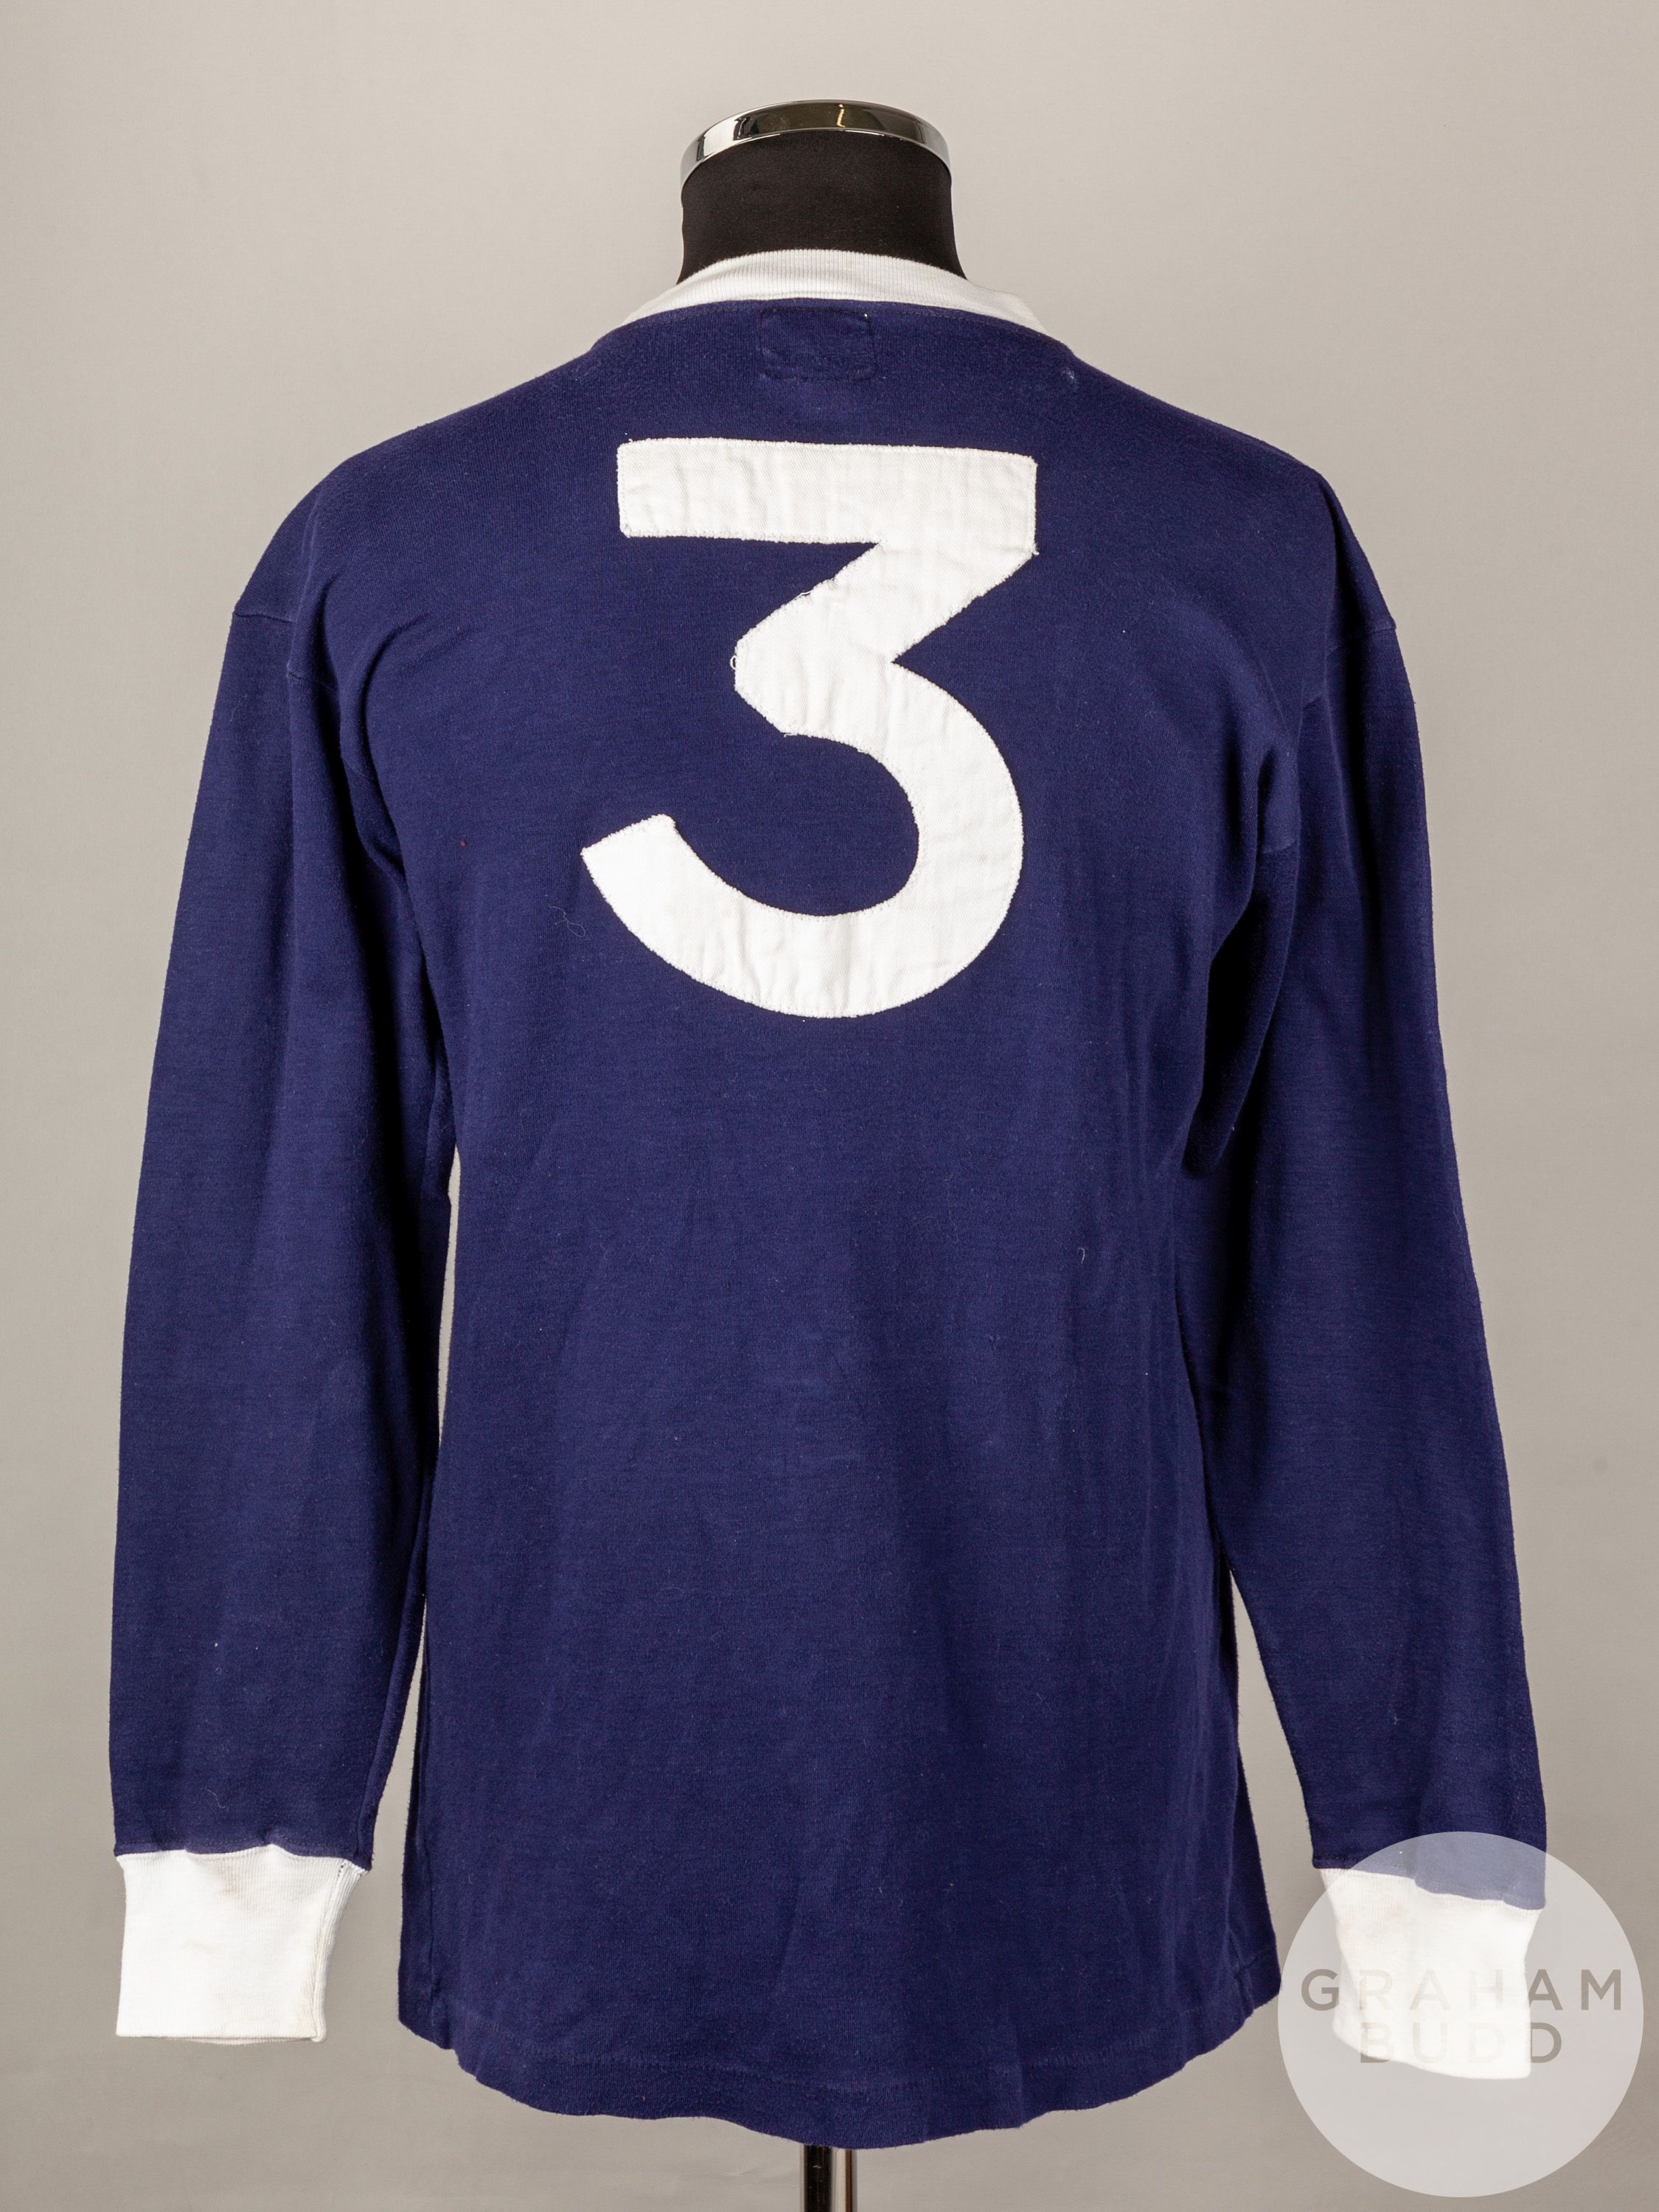 Eddie McCreadie blue No.3 Scotland International match long-sleeved shirt, 1967 - Image 2 of 7